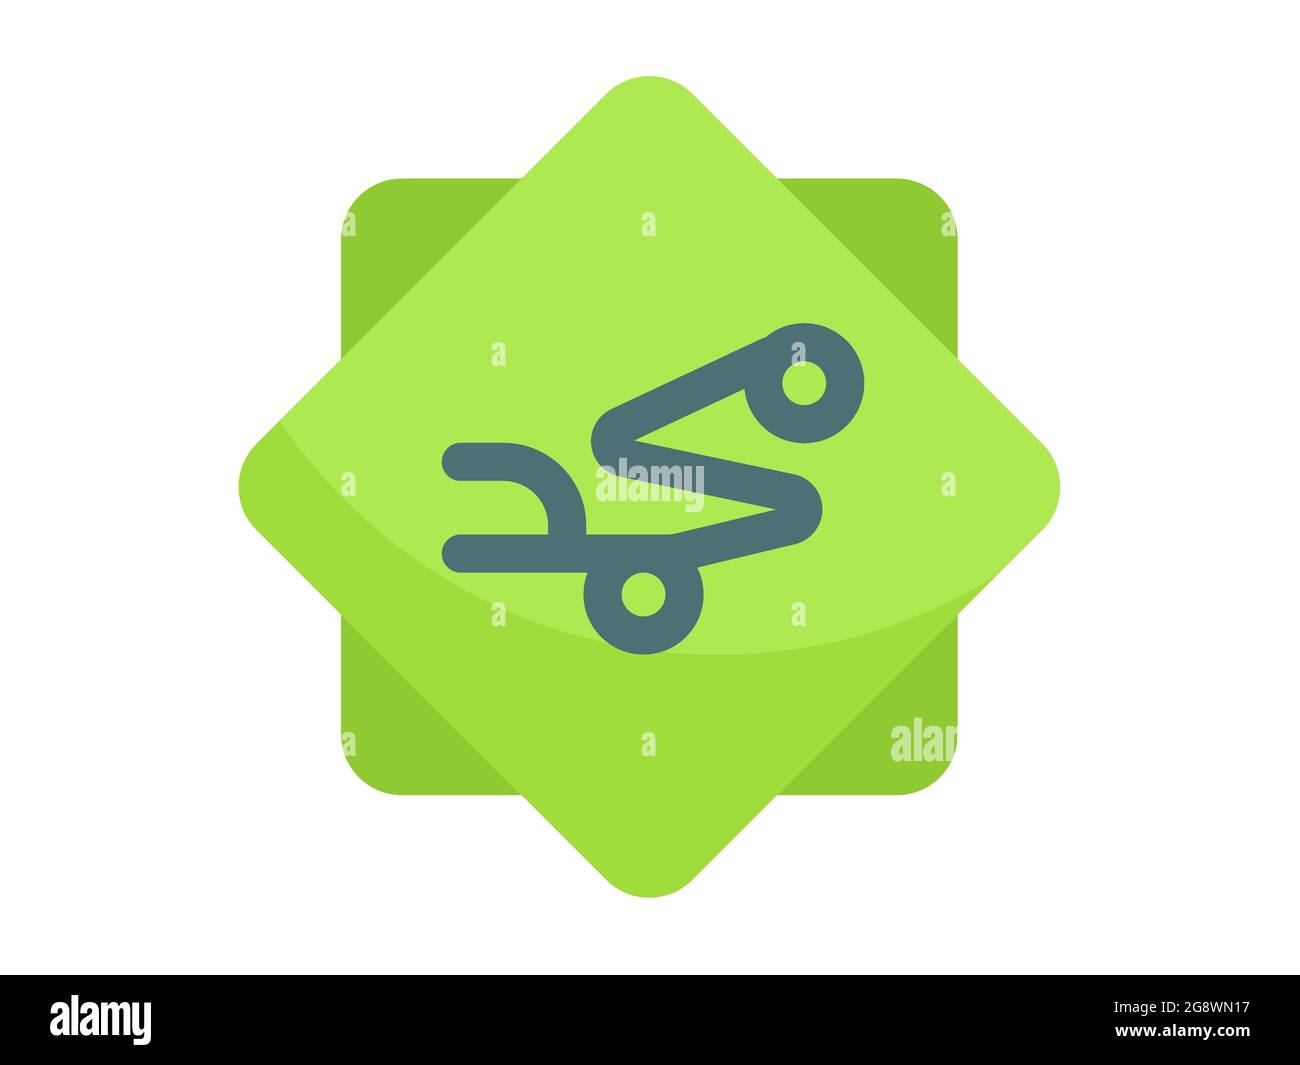 muhammad prophet islam word single isolated icon with flat style vector illustration Stock Photo